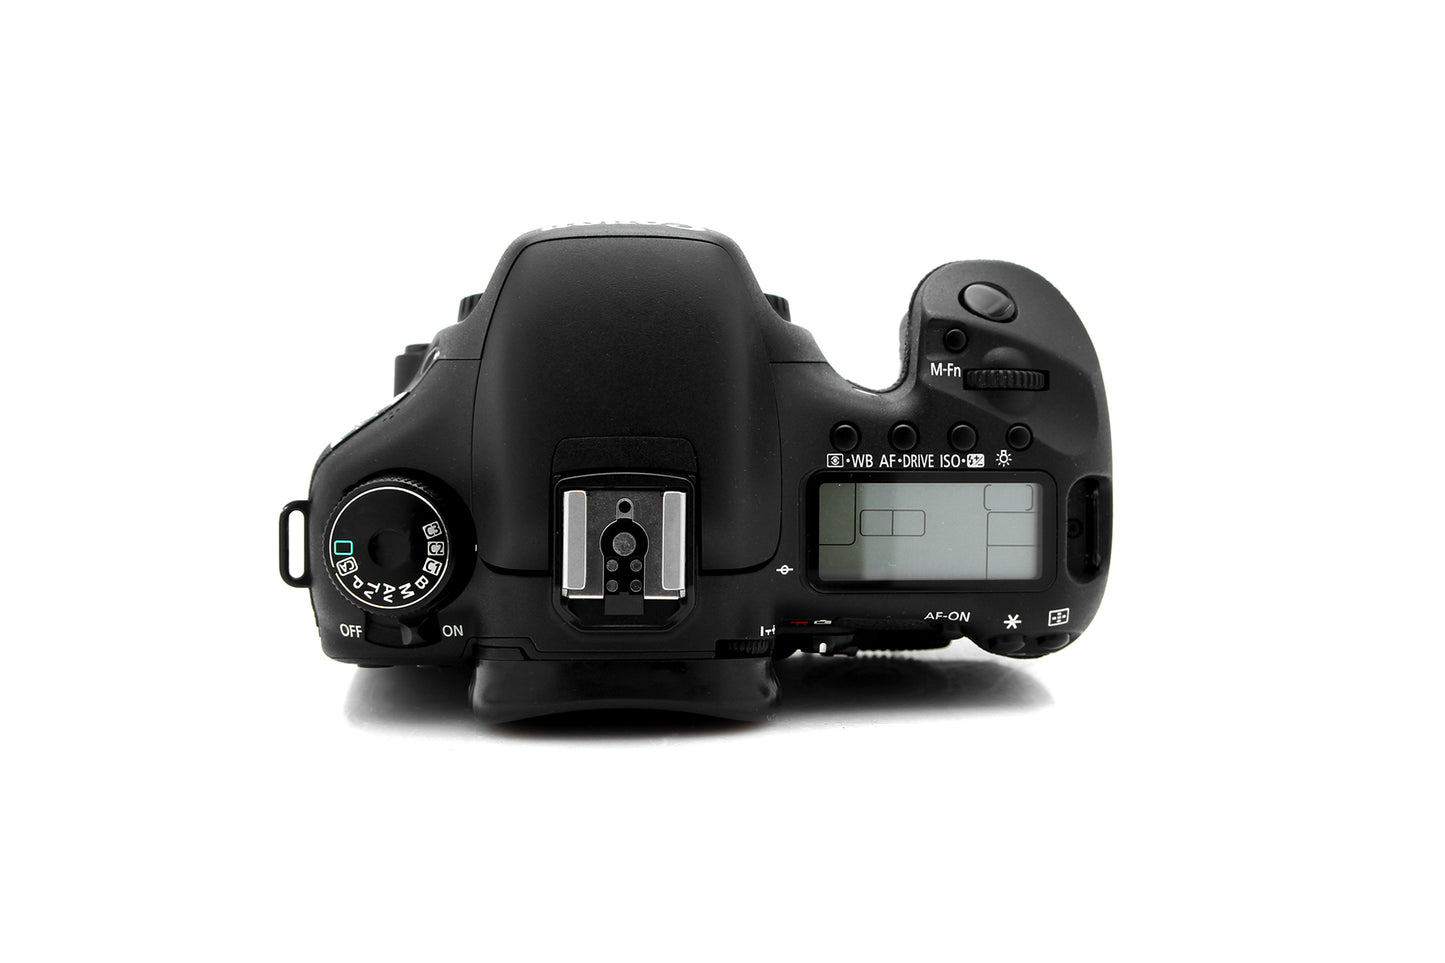 Used Canon EOS 7D Camera Body